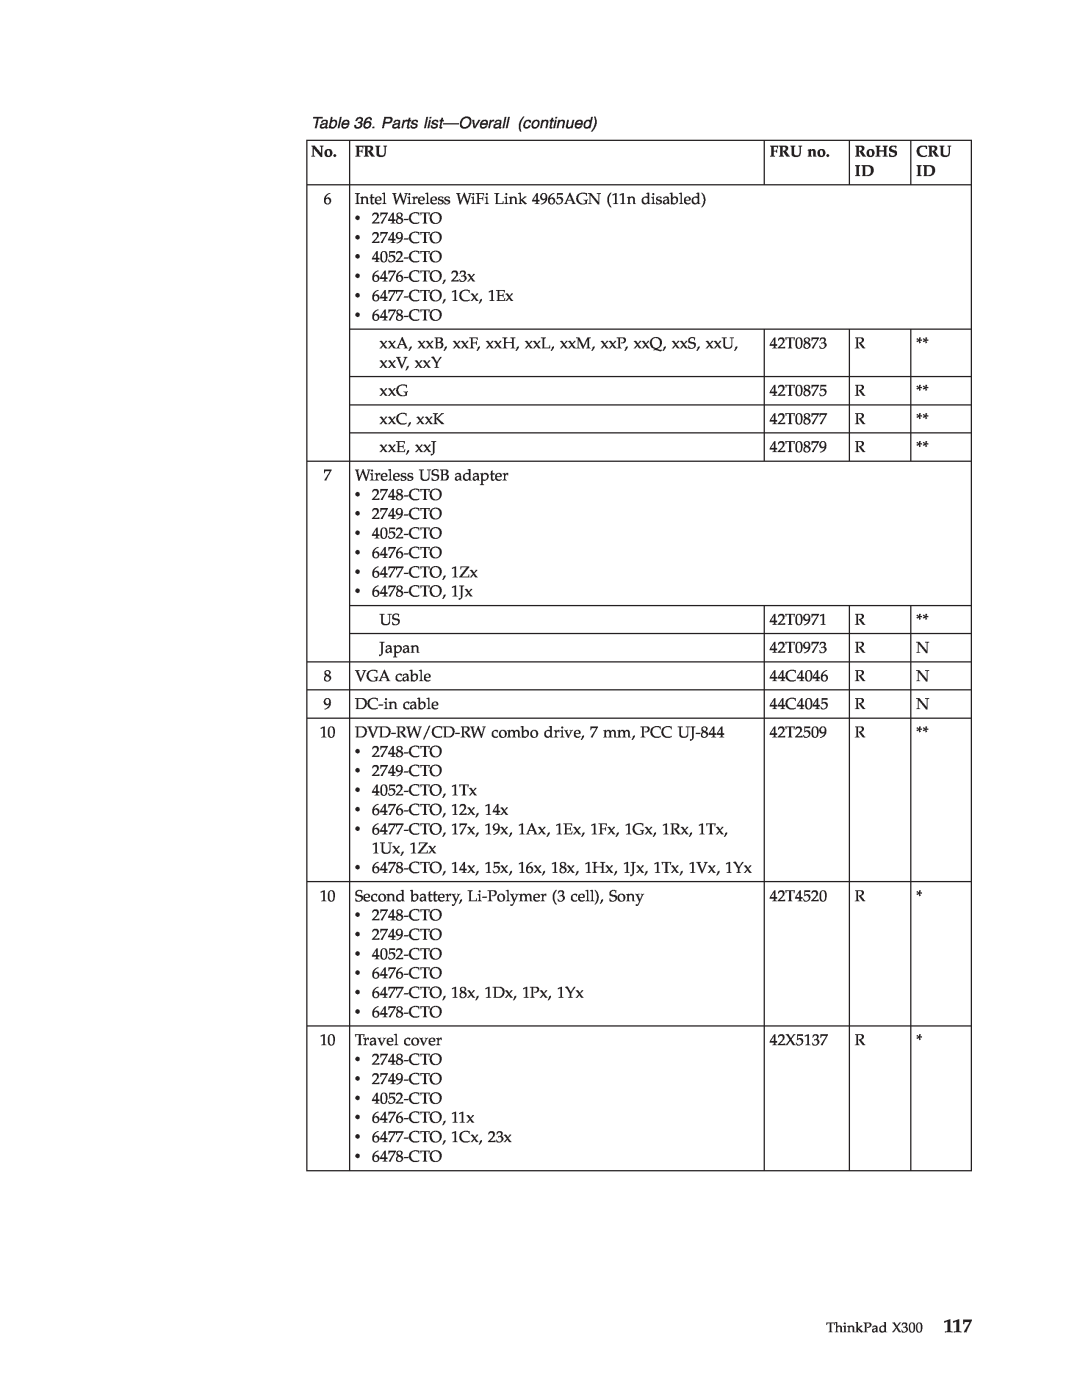 Lenovo X300 manual Parts list-Overall continued, FRU no, RoHS 